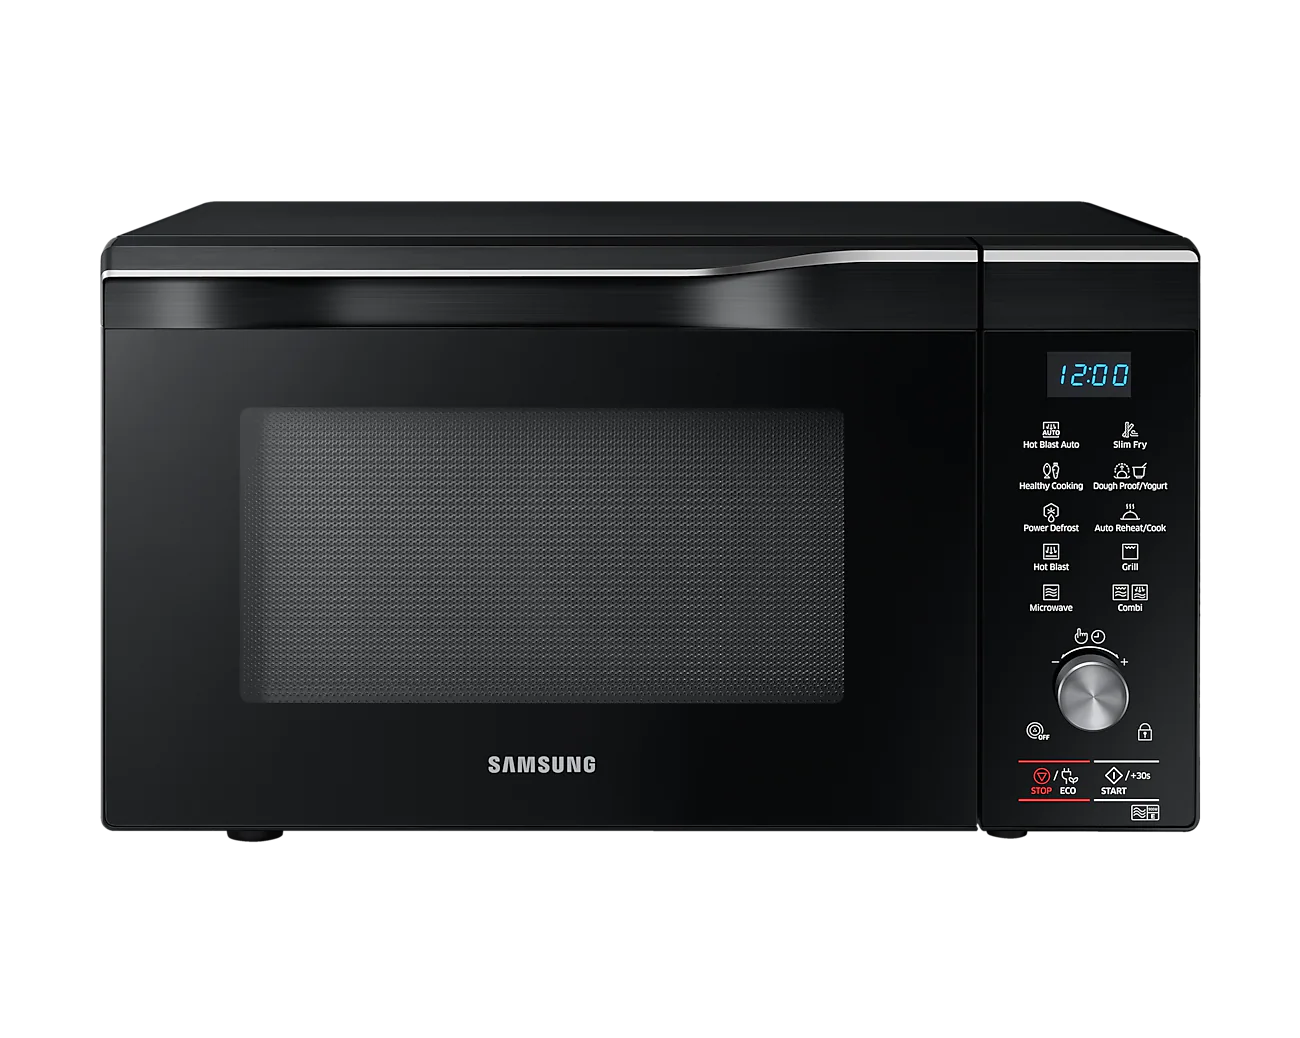 Samsung 32L Convection Microwave Oven MC32K7055CK/EU